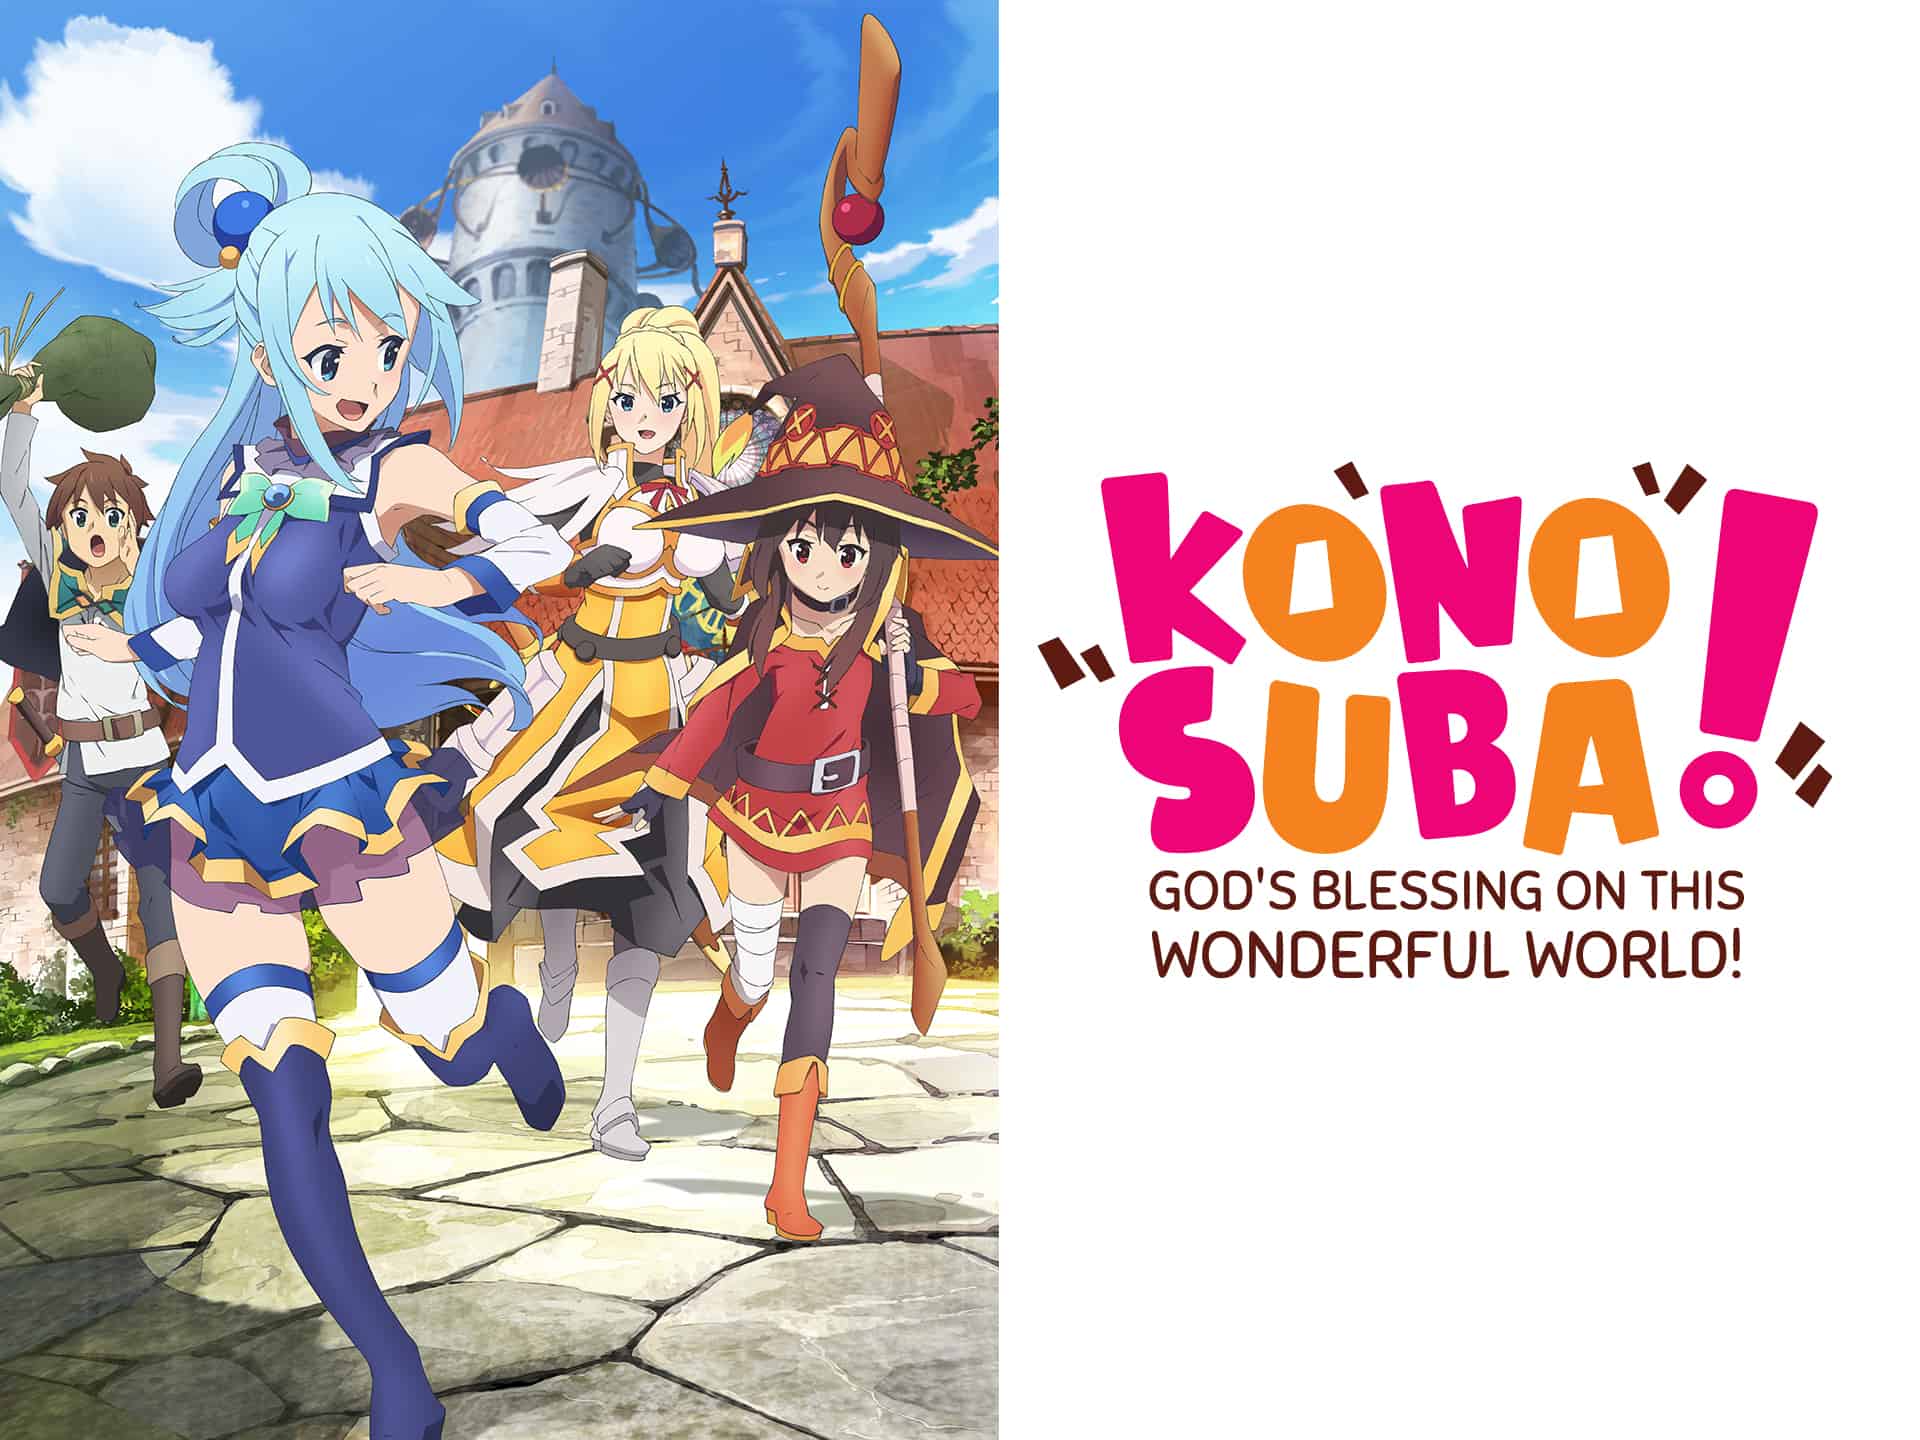 Konosuba: God's Blessing on this Wonderful World!